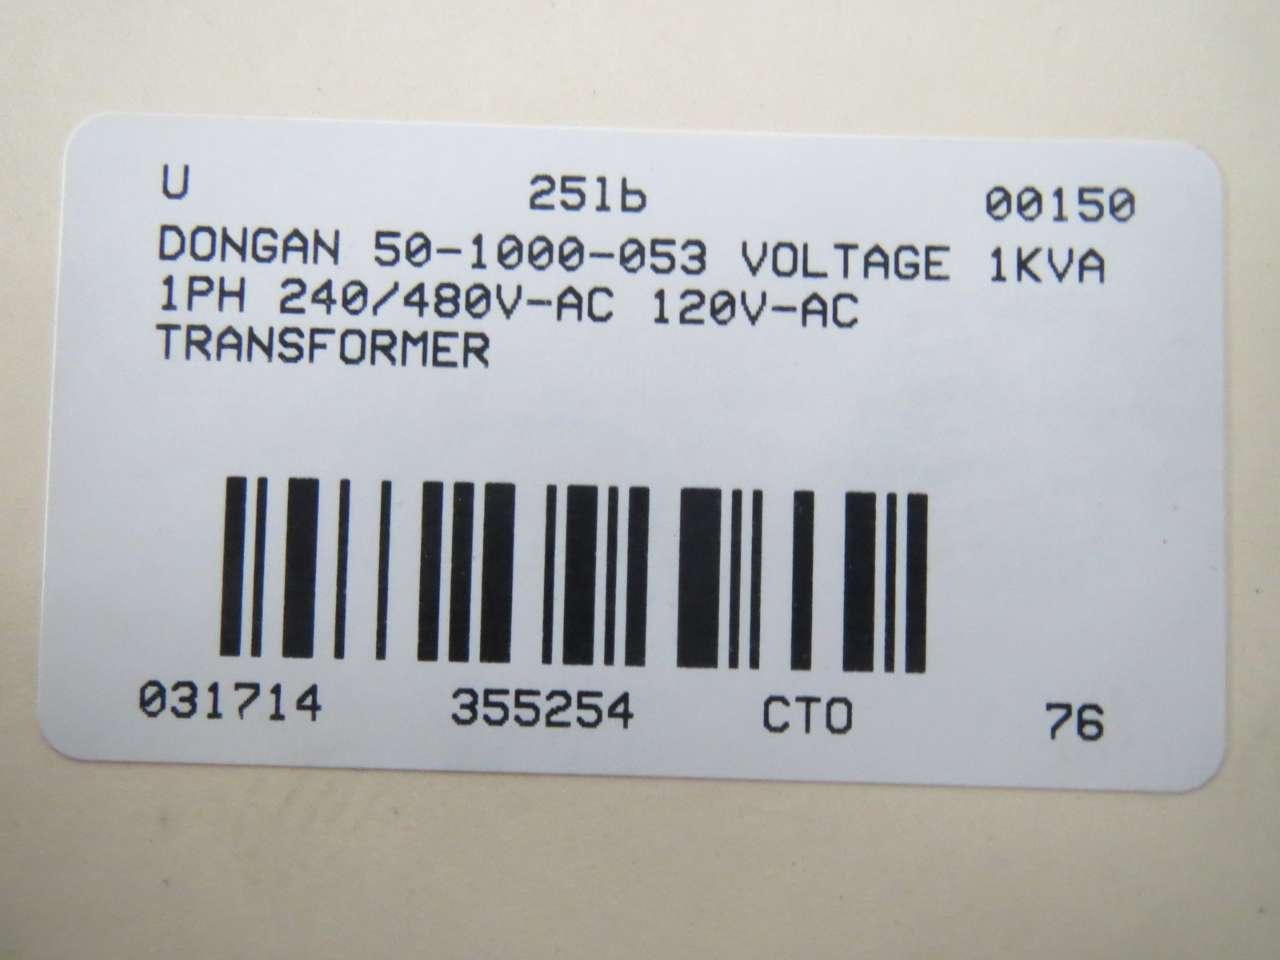 Dongan 50-1000-053 Industrial Control Transformer 1kva 204x480v for sale online 